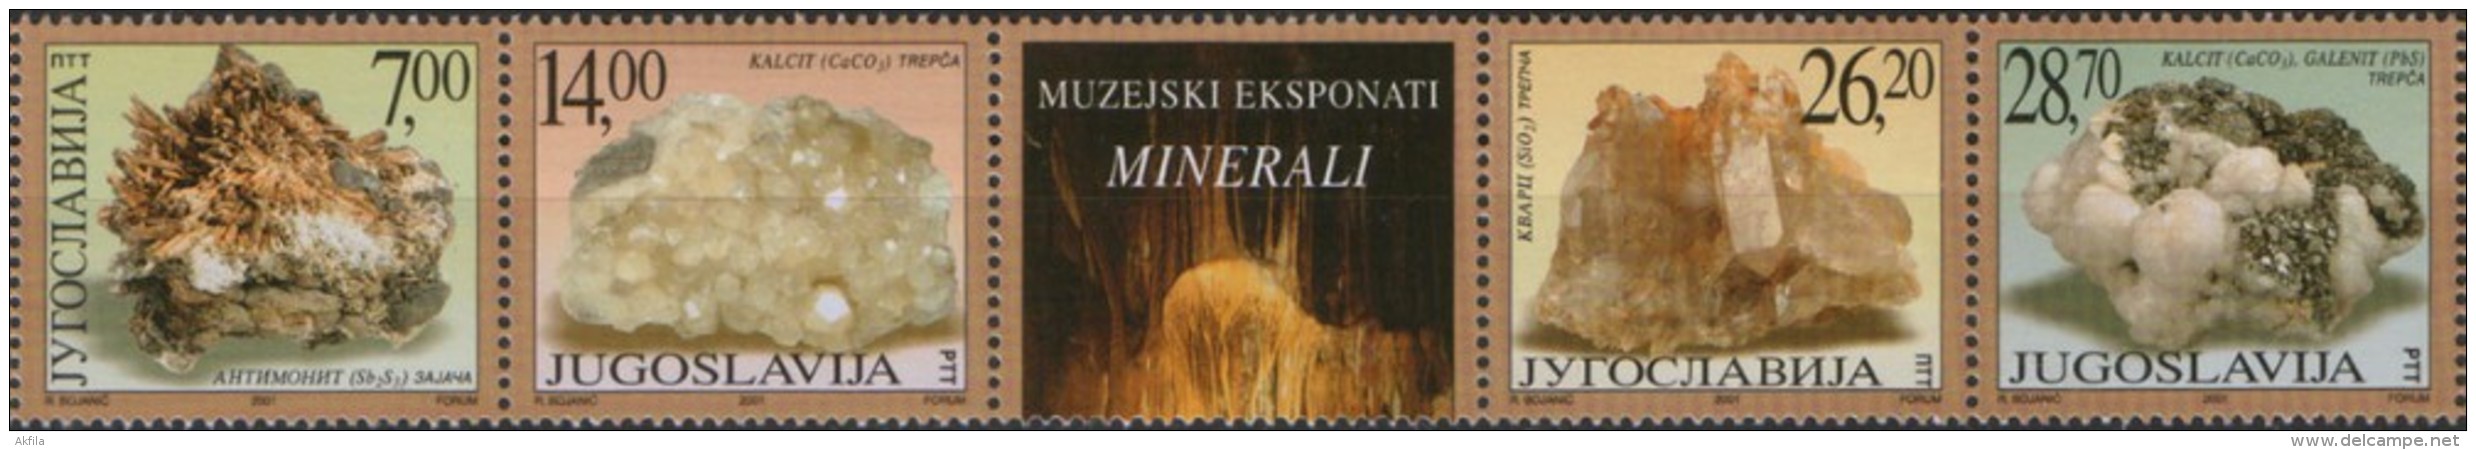 Yugoslavia 2001 Museum Exhibits - Minerals (Stibnite, Calcite, Rock Crystal And Galena), MNH (**) Michel 3047-3050 - Minerals